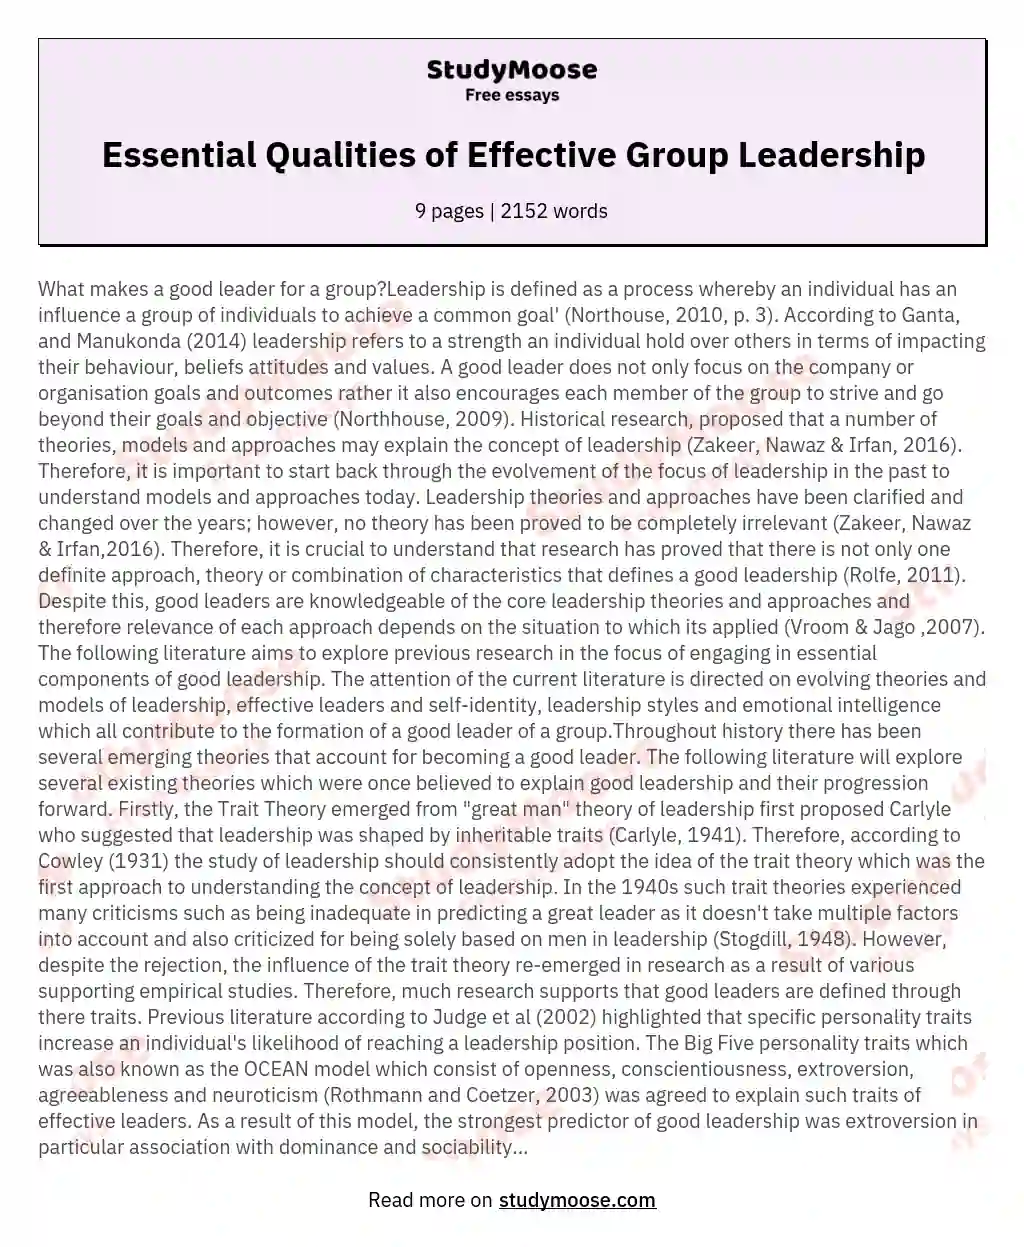 Essential Qualities of Effective Group Leadership essay